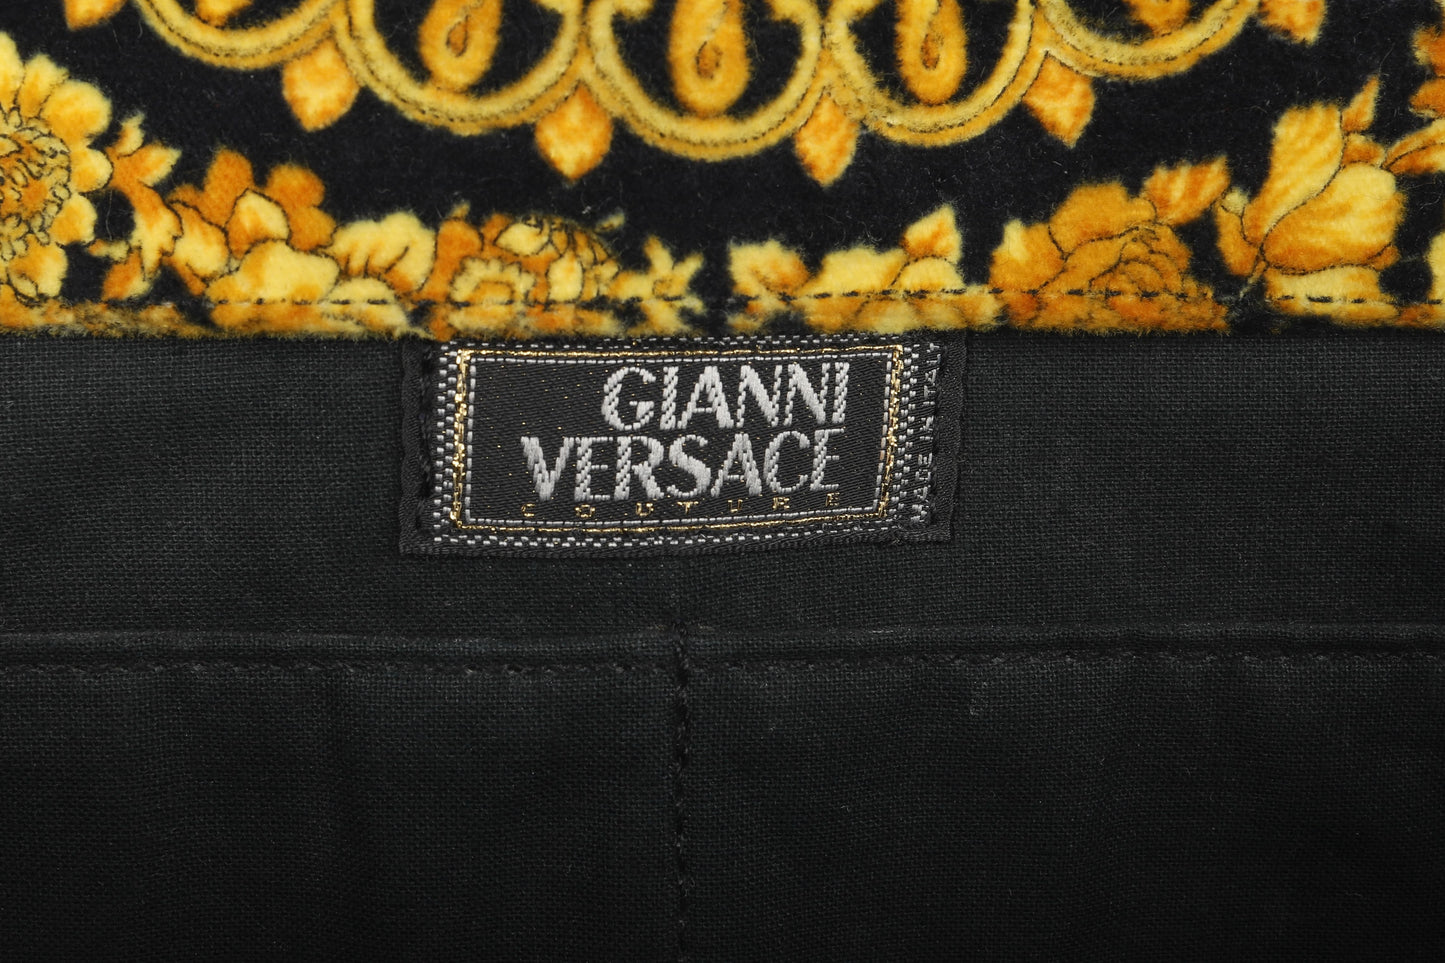 Sac Gianni Versace 